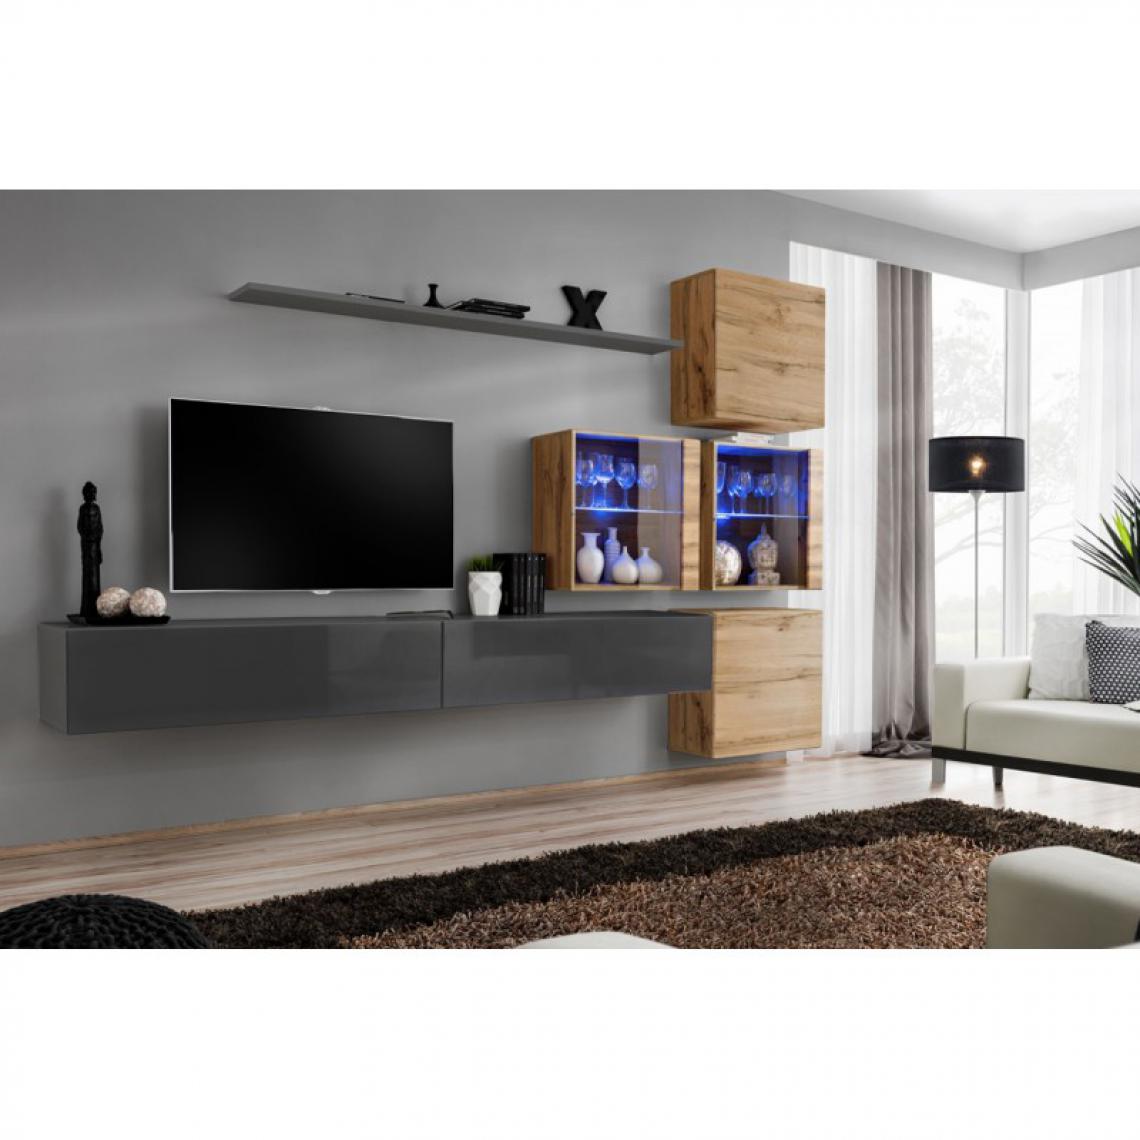 Ac-Deco - Meuble TV Mural Design Switch XIX 310cm Gris & Naturel - Meubles TV, Hi-Fi